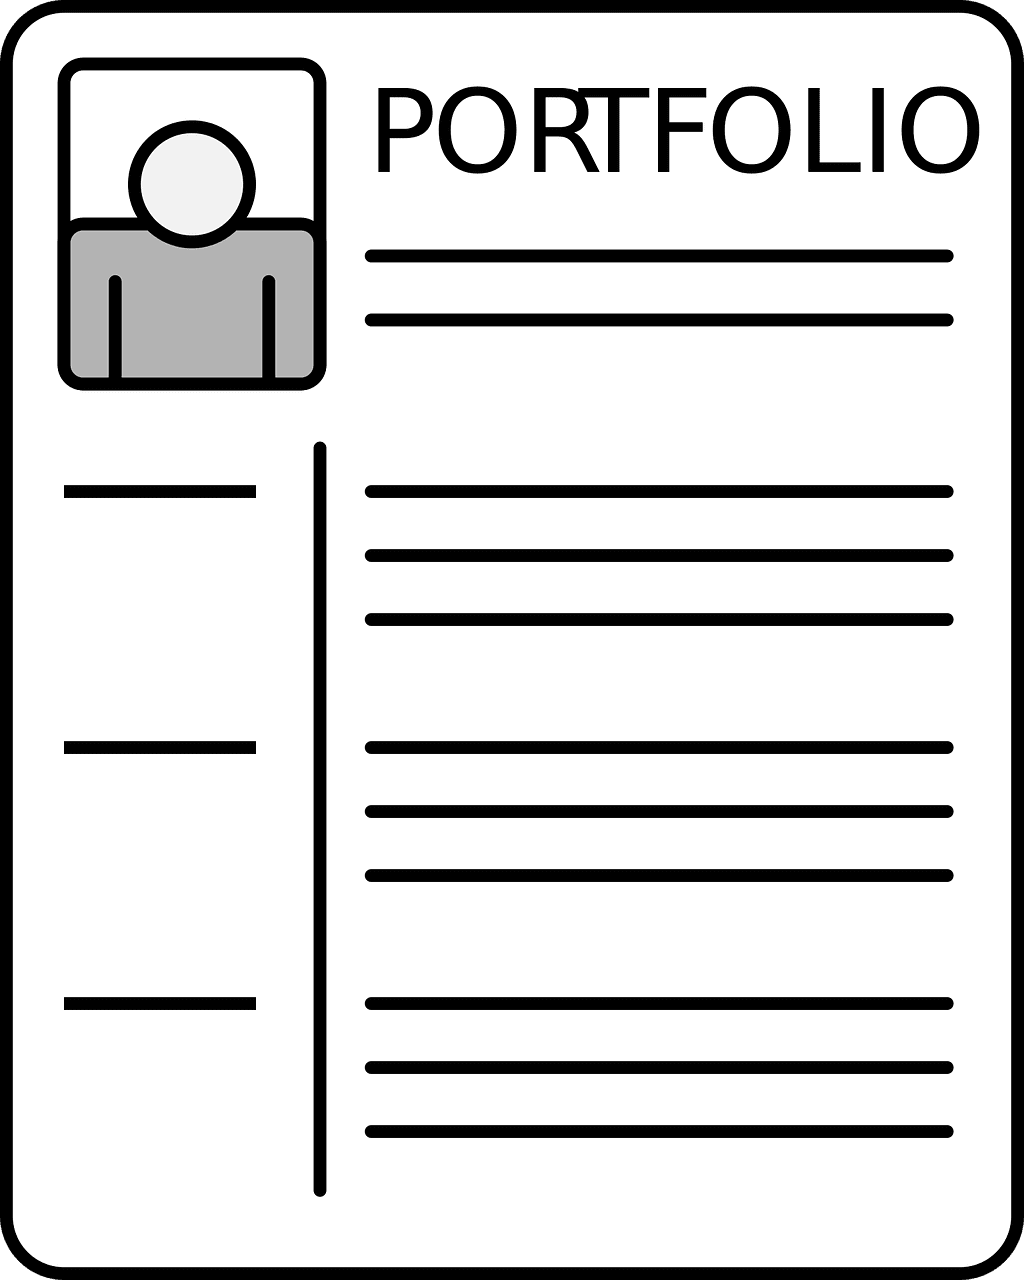 Build a polished resume